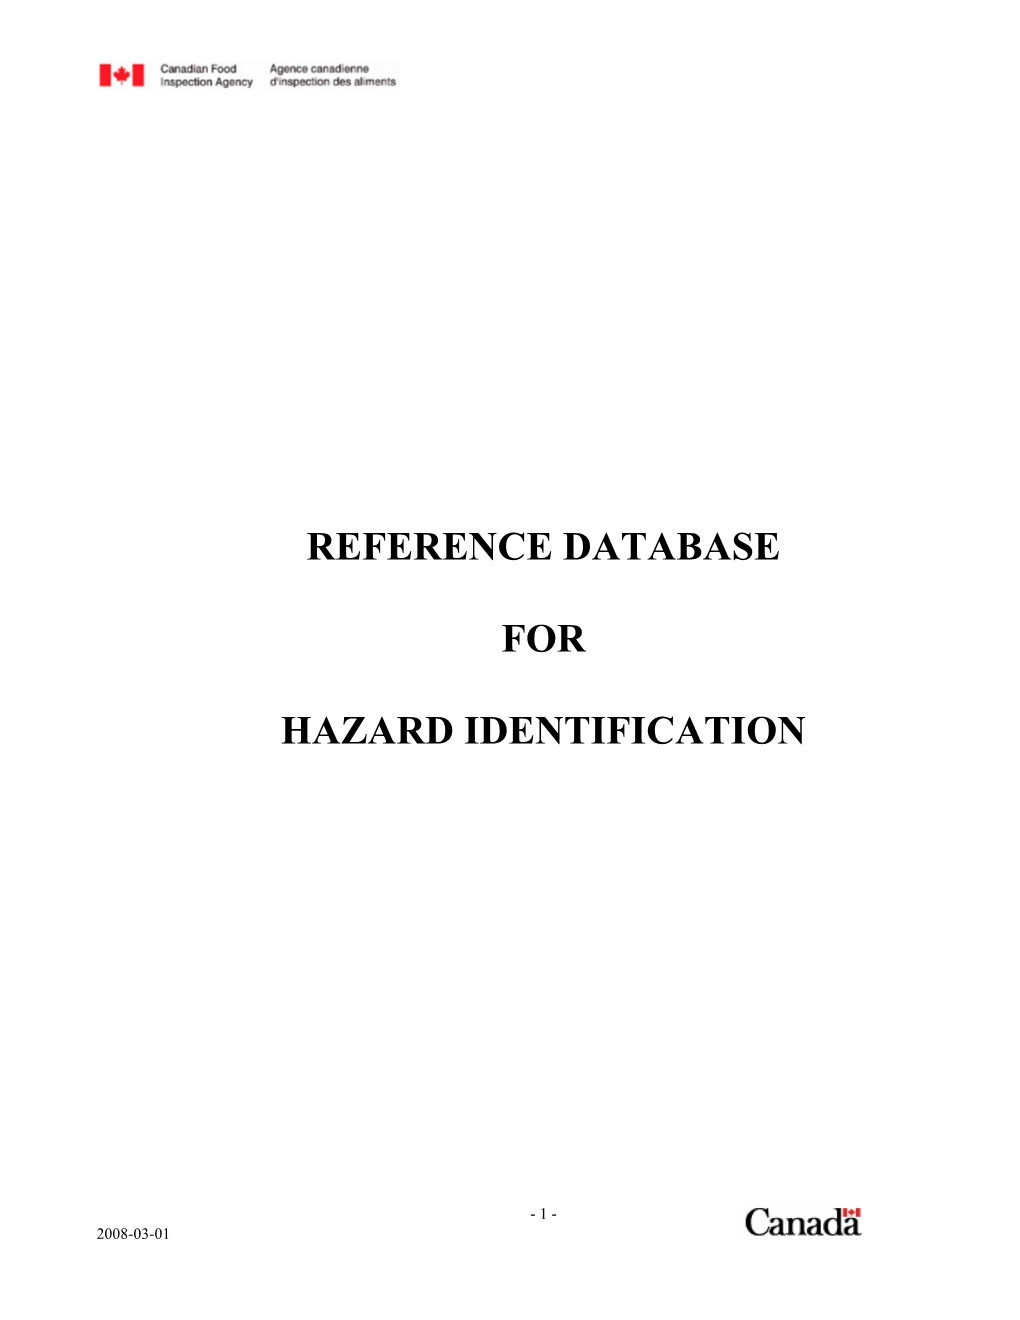 Reference Database for Hazard Identification